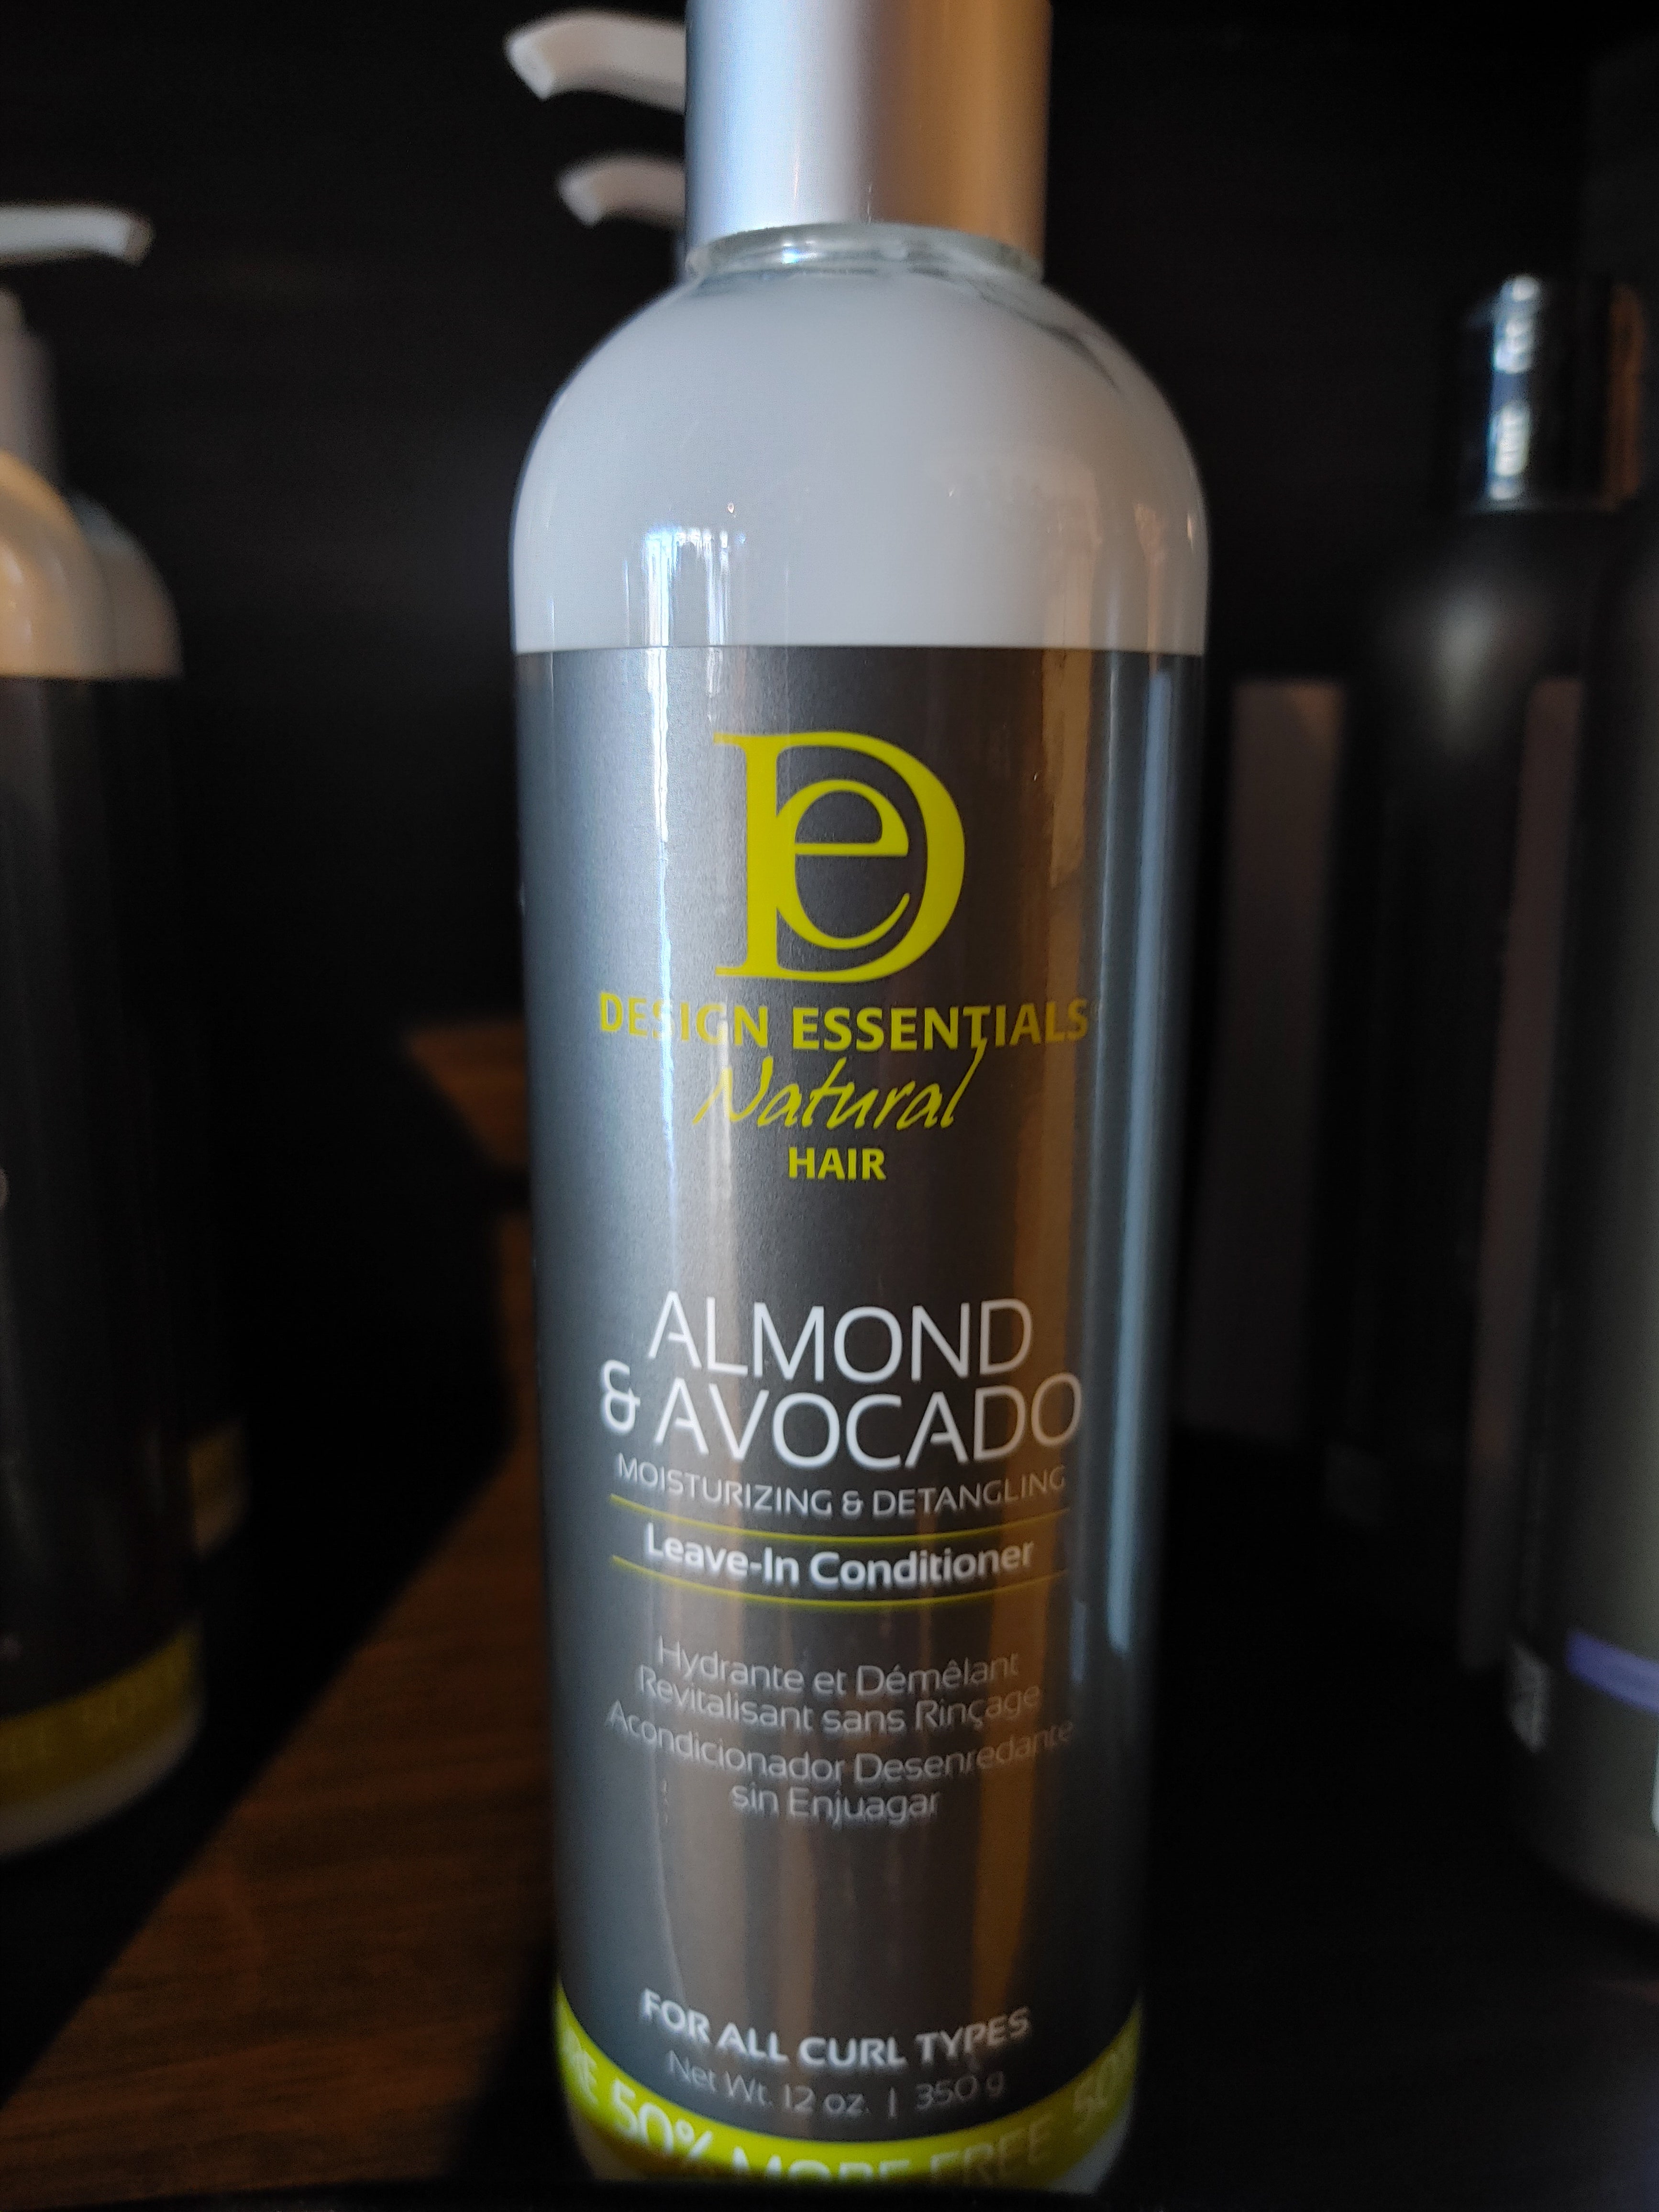 Design Essentials Almond & Avocado Leave-in Conditioner